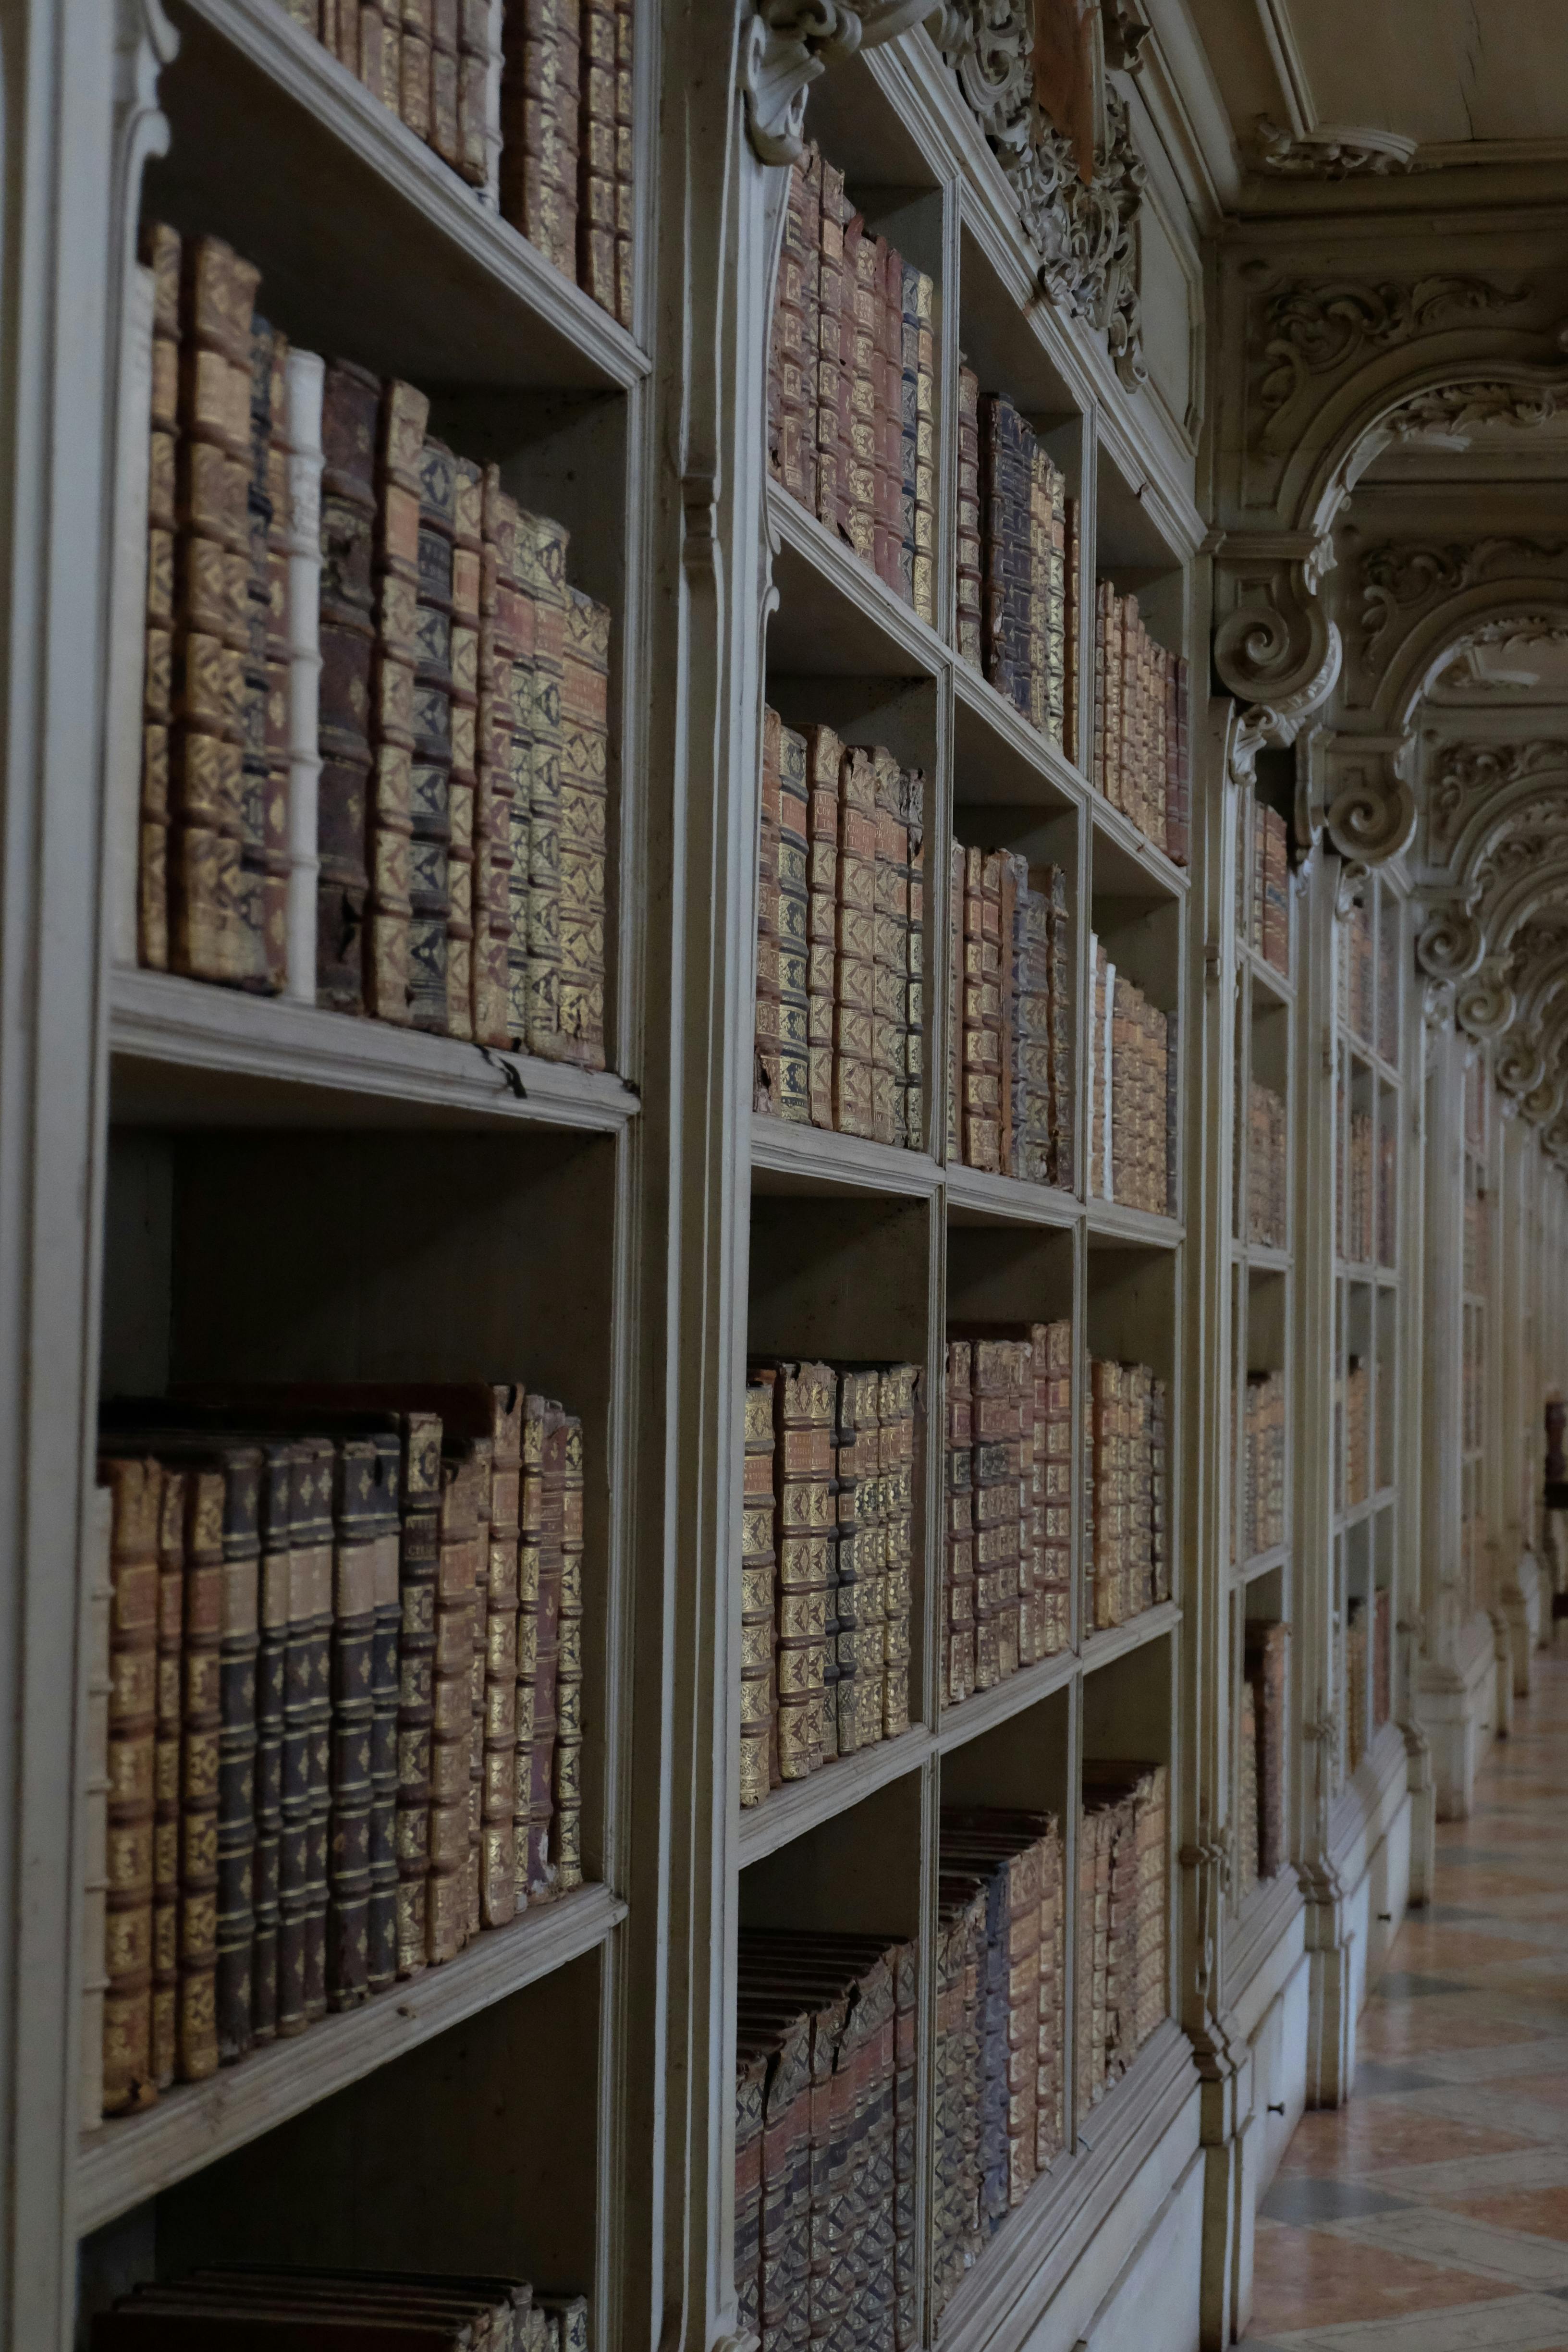 antique books arranged on bookshelves inside mafra national palace